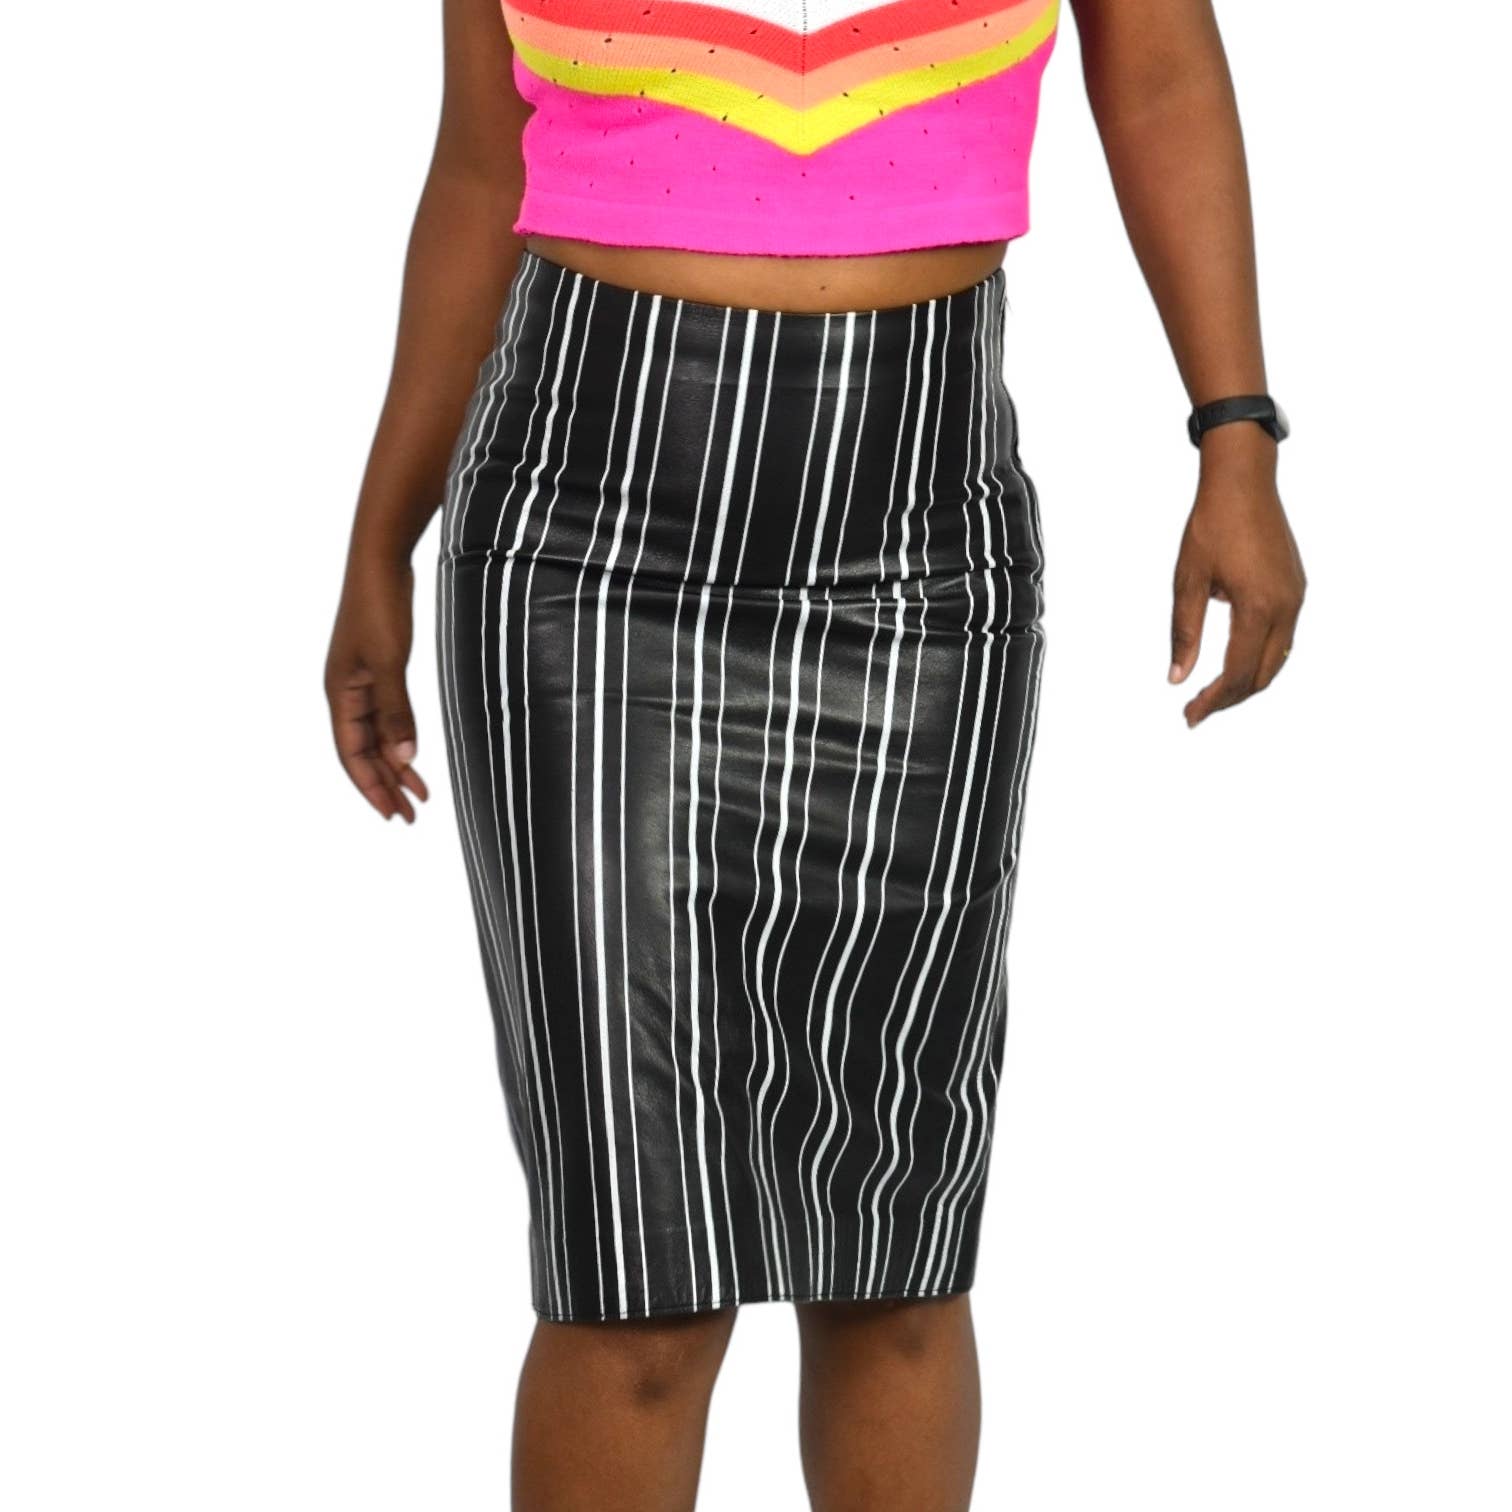 Title A Leather Pencil Skirt Black Striped Agyness Deyn High Waist Soft Size Small